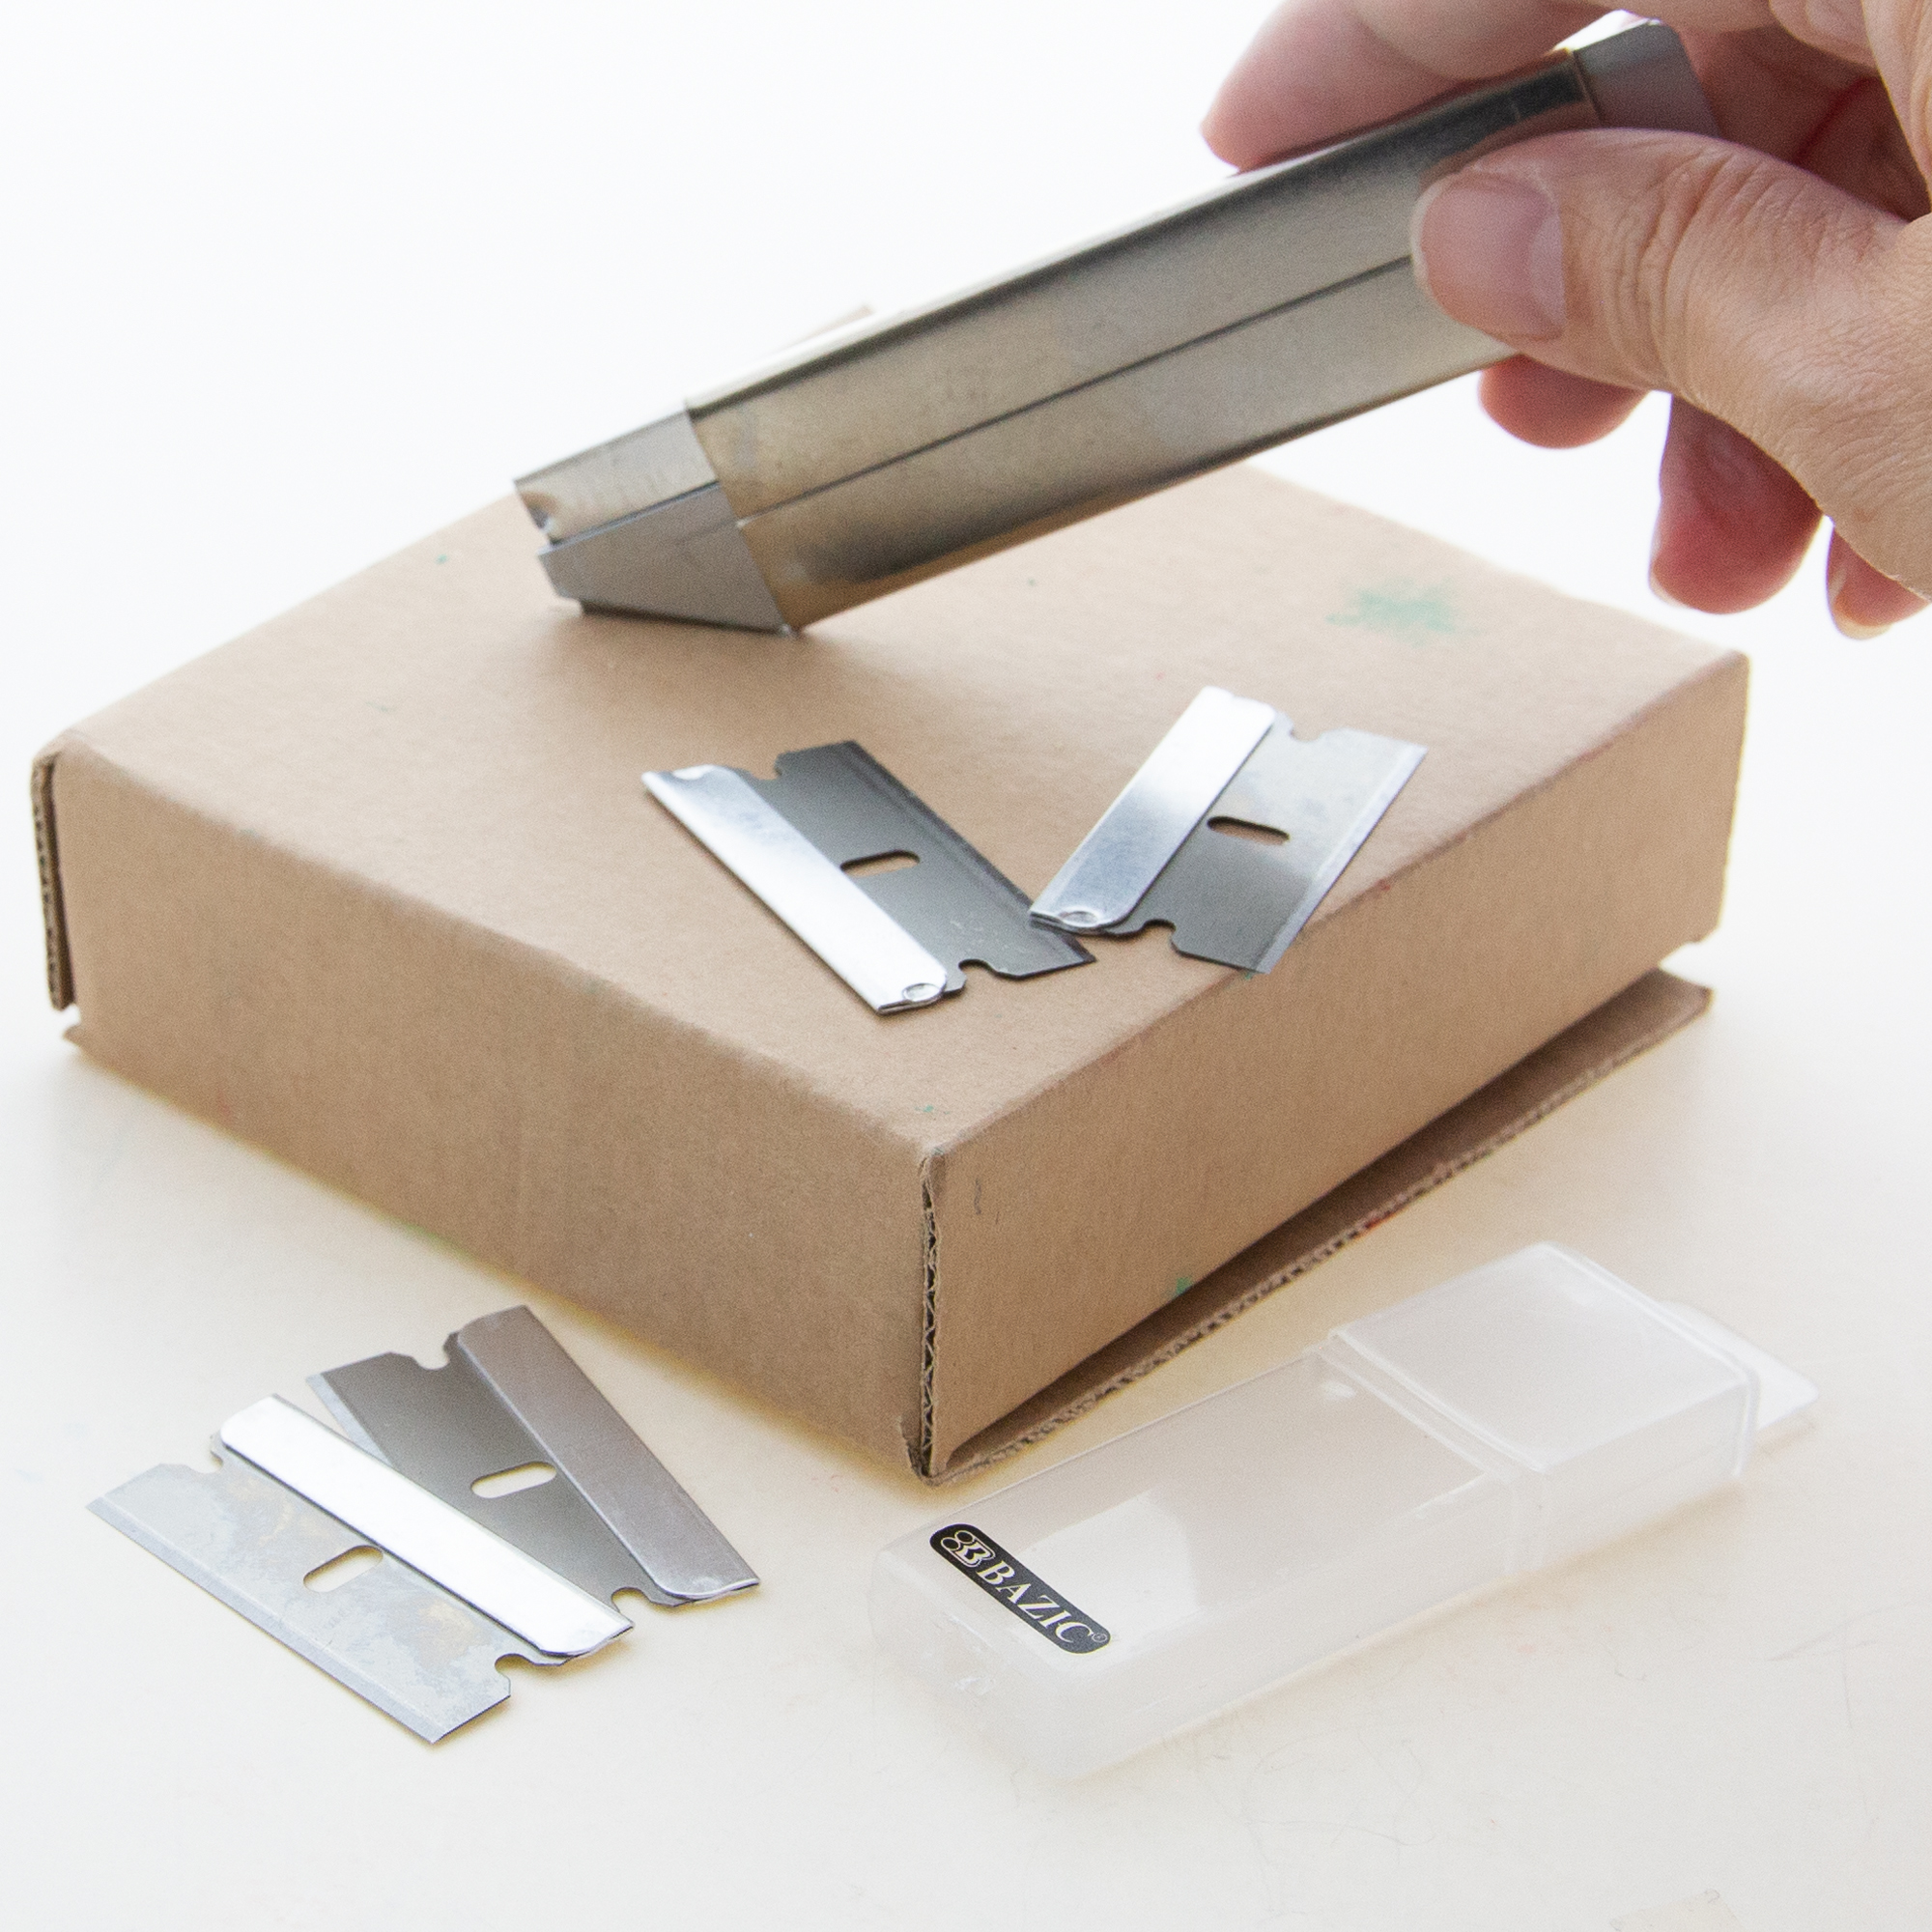 Cardboard Carton Box Sizer and Reducer with Blade Saver